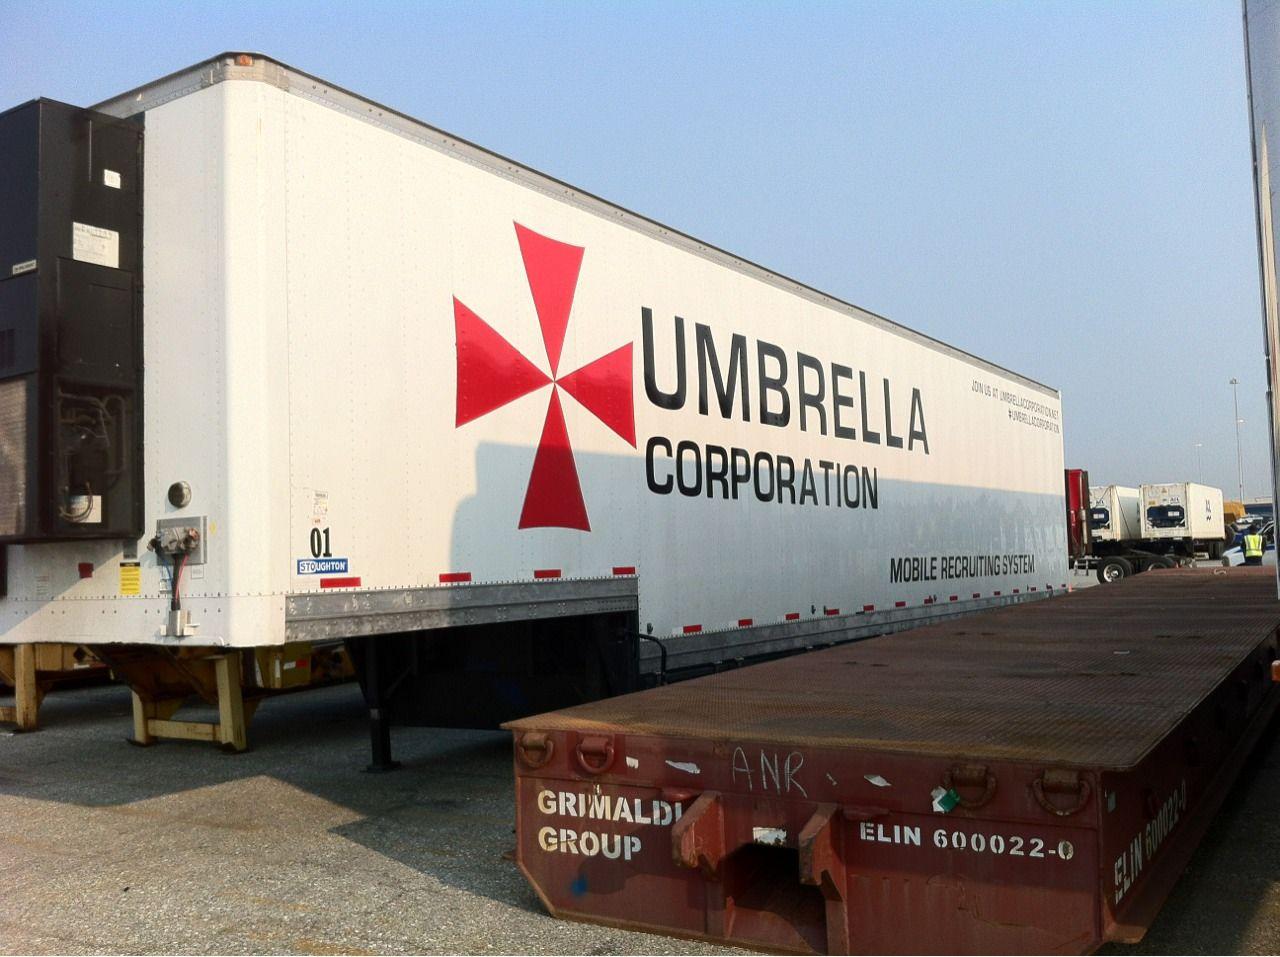 Real Life Umbrella Corporation Logo - Umbrella Corp Truck. Seems Legit... Don't let them take over the ...